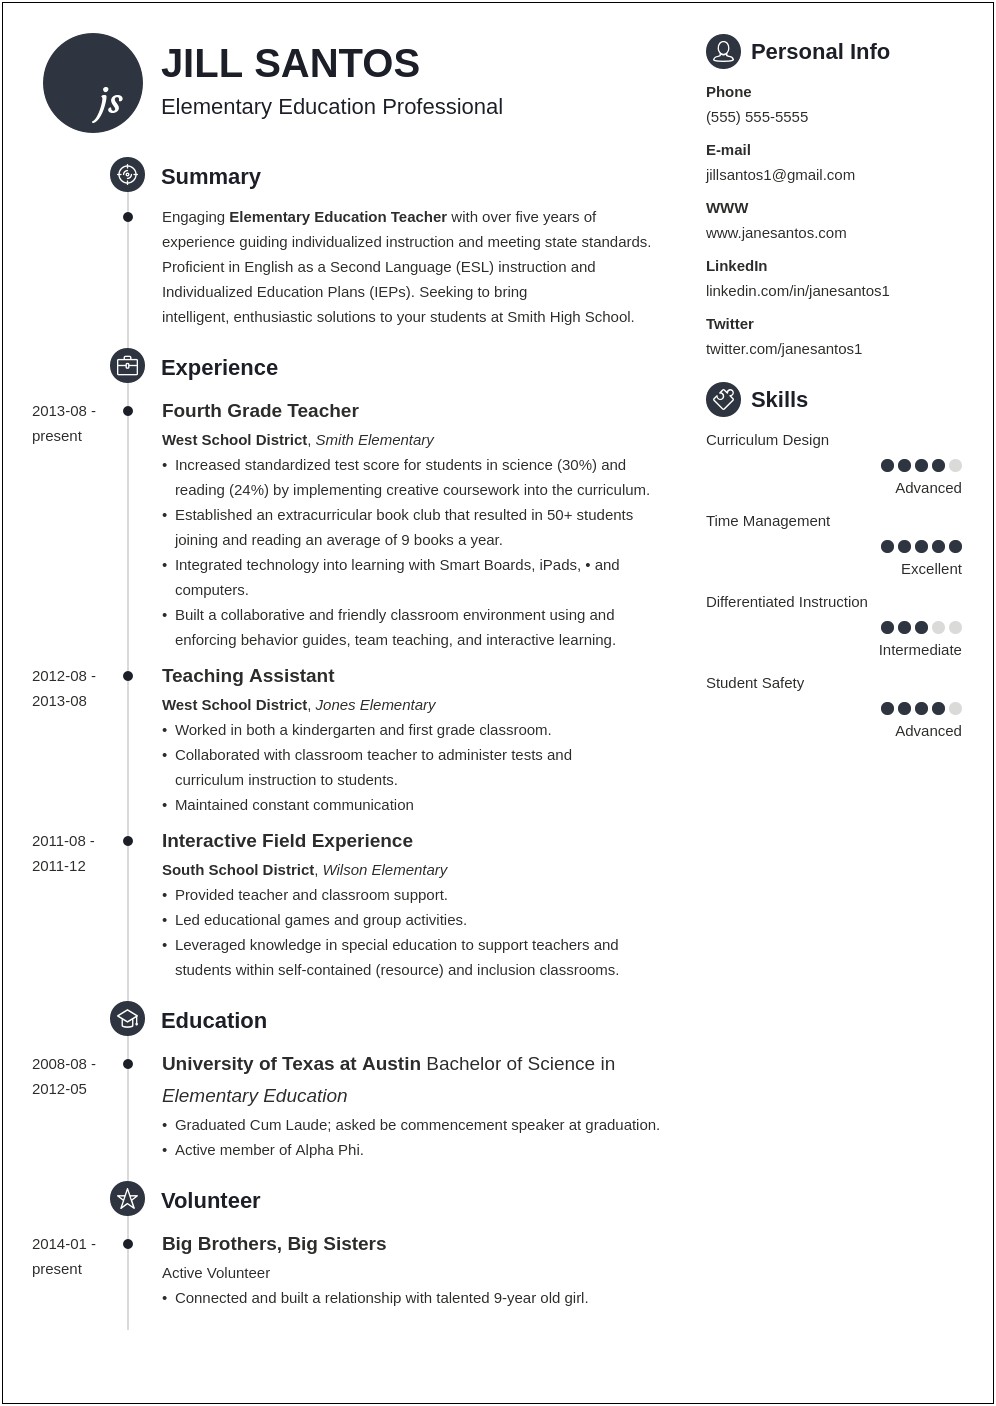 Job Qualifications For Teachers Resume